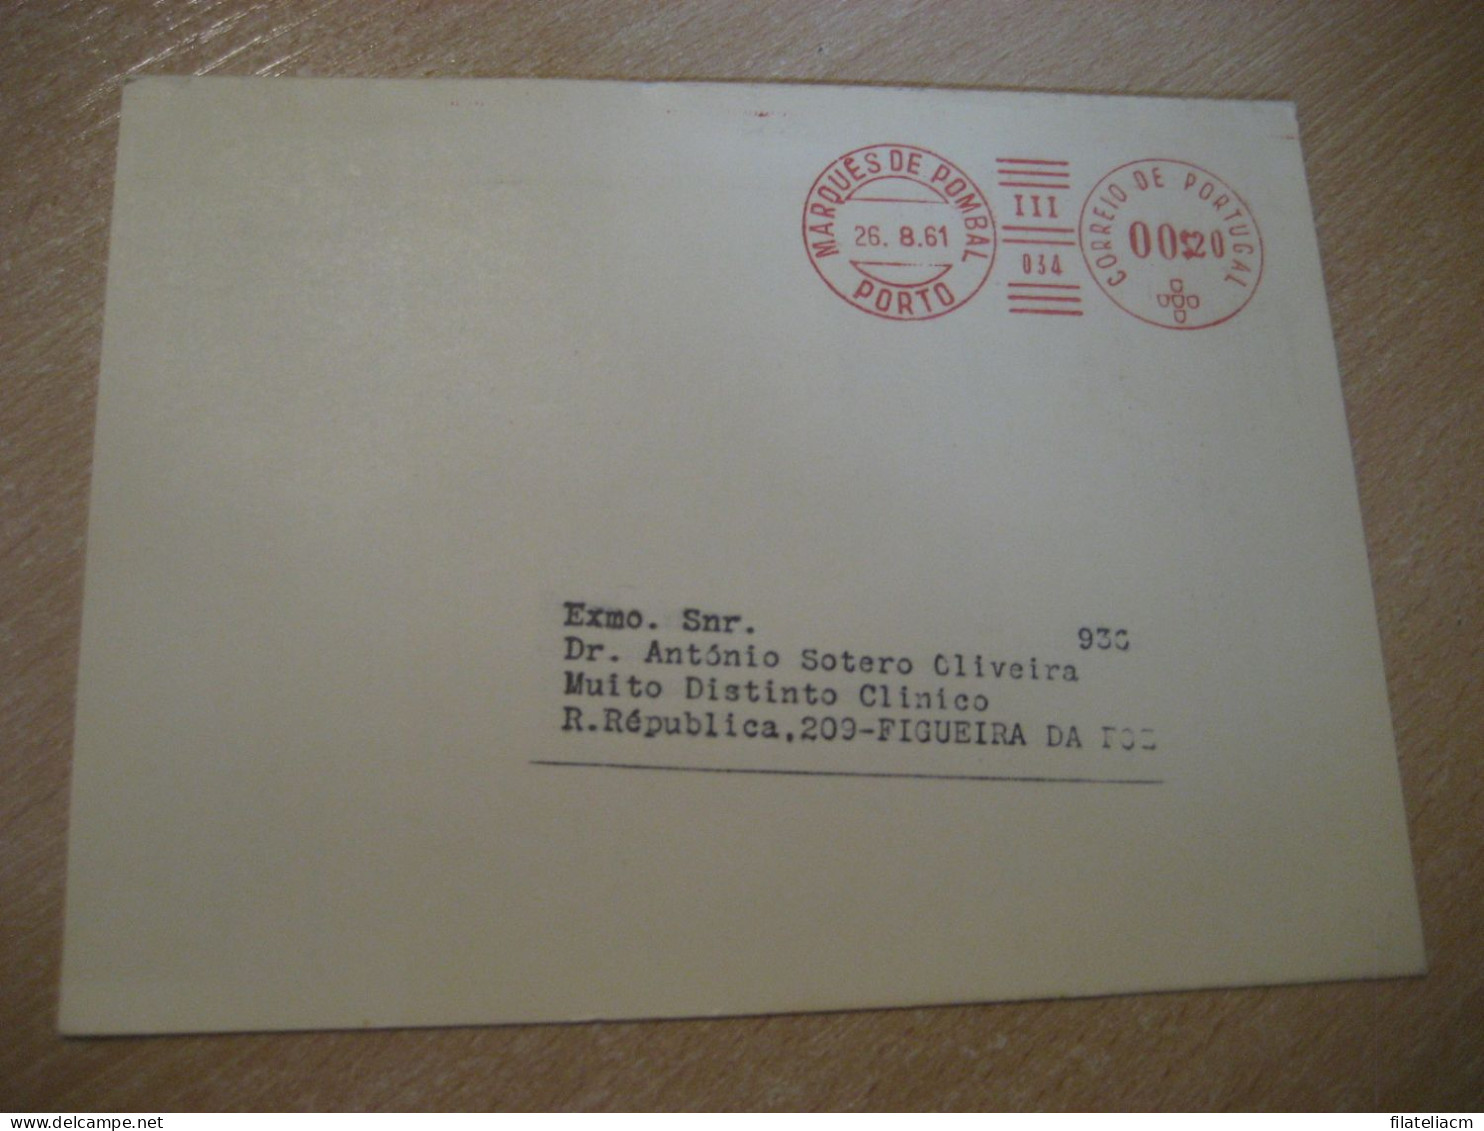 PORTO 1961 To Figueira Da Foz BIAL Cosatetril Tetraciclina Glucosamina Pharmacy Health Meter Mail Document Card PORTUGAL - Brieven En Documenten